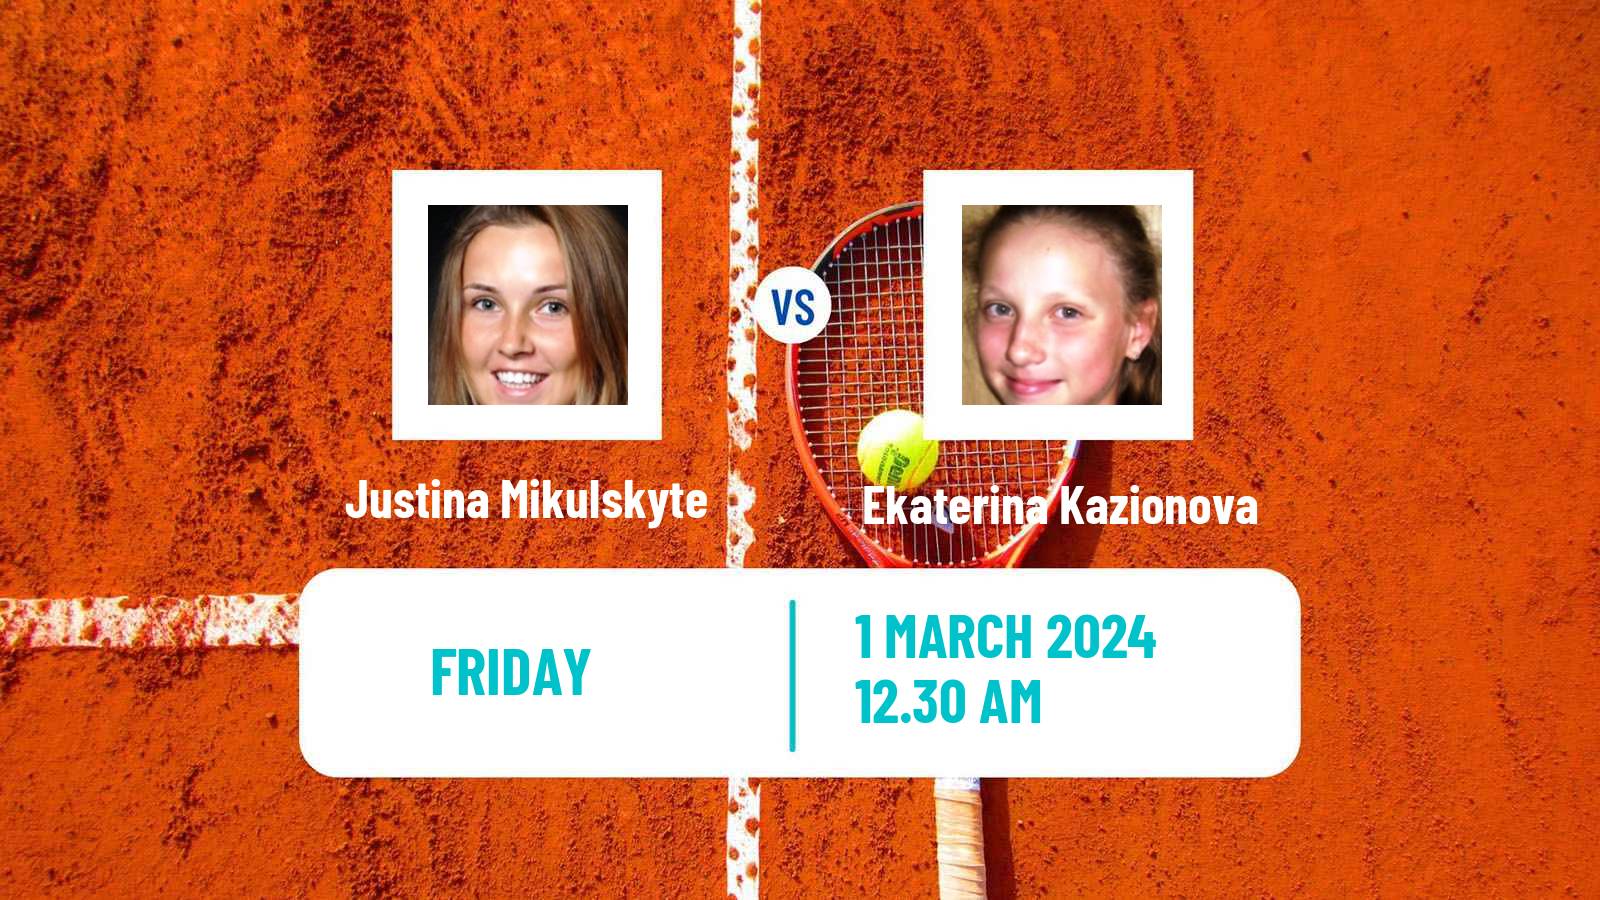 Tennis ITF W35 Gurugram Women Justina Mikulskyte - Ekaterina Kazionova